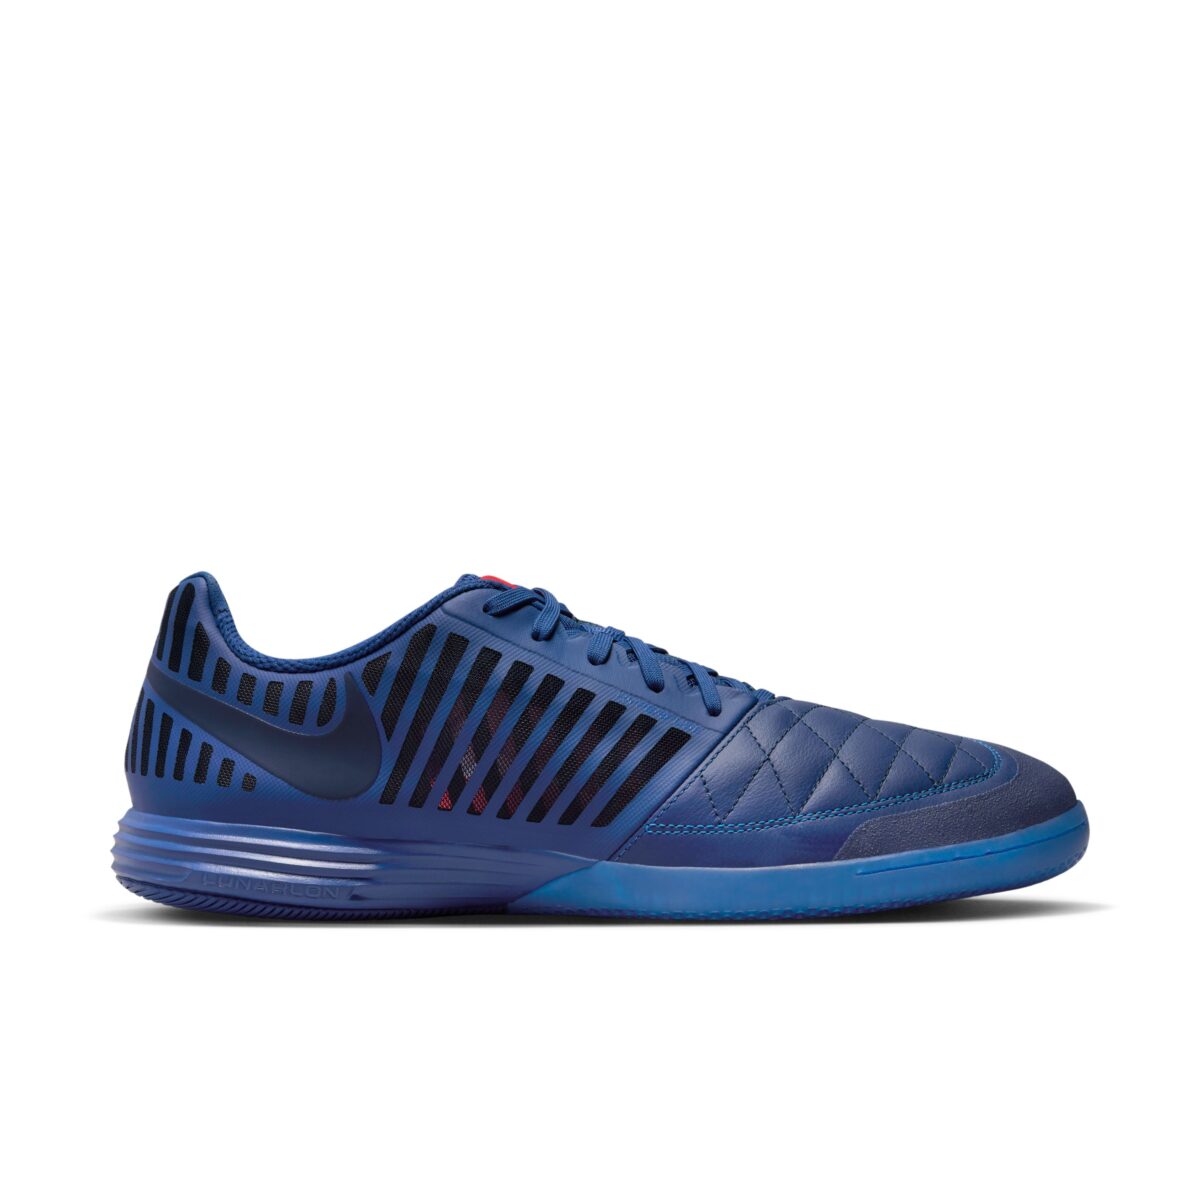 Nike Lunar Gato II Zaalvoetbalschoenen (IN) Donkerblauw Blauw Zwart Rood